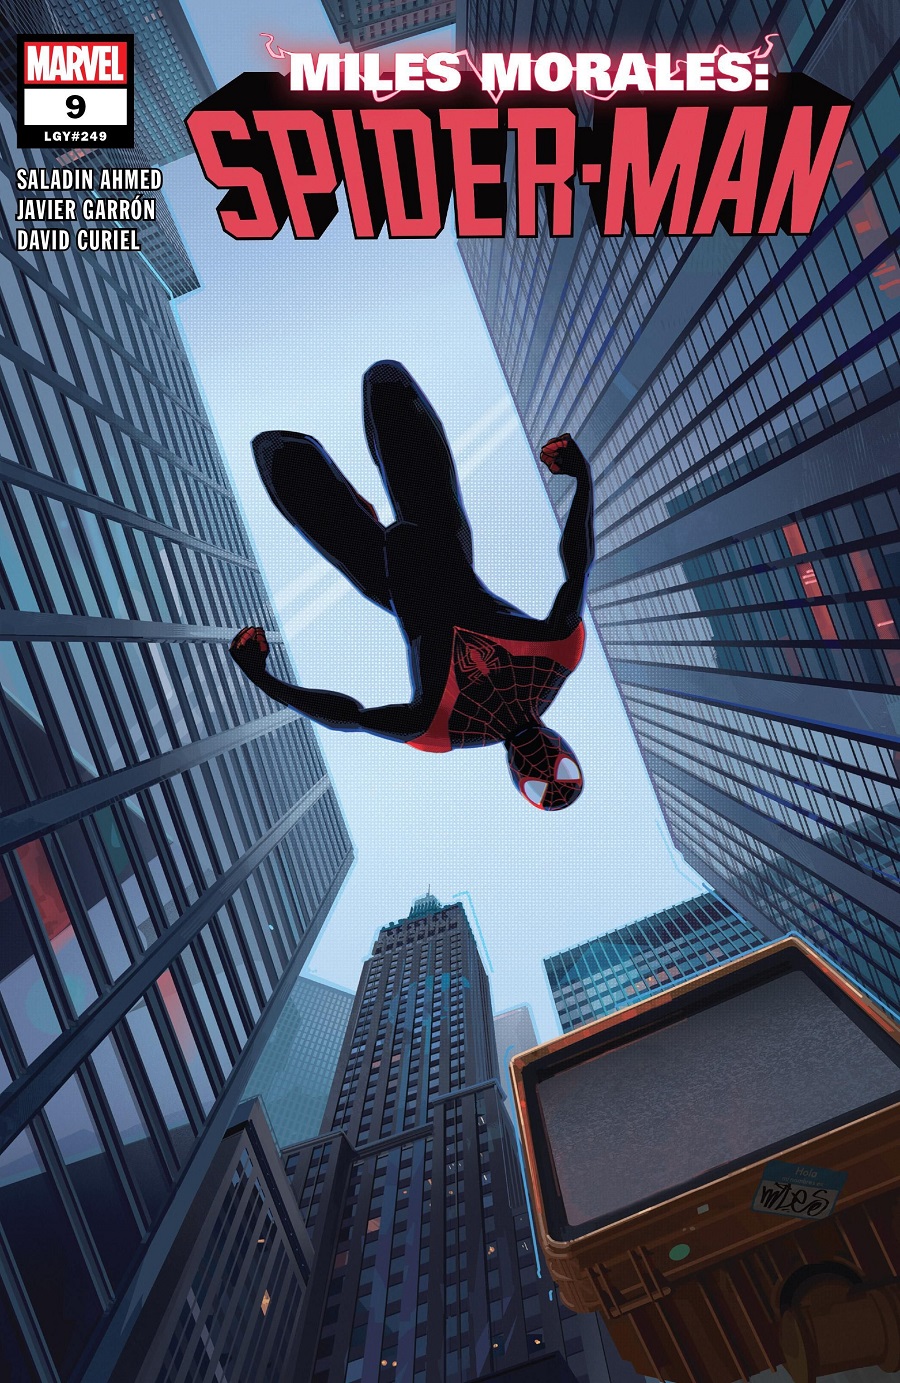 Previews: August 14th, 2019 - Spider Man Crawlspace